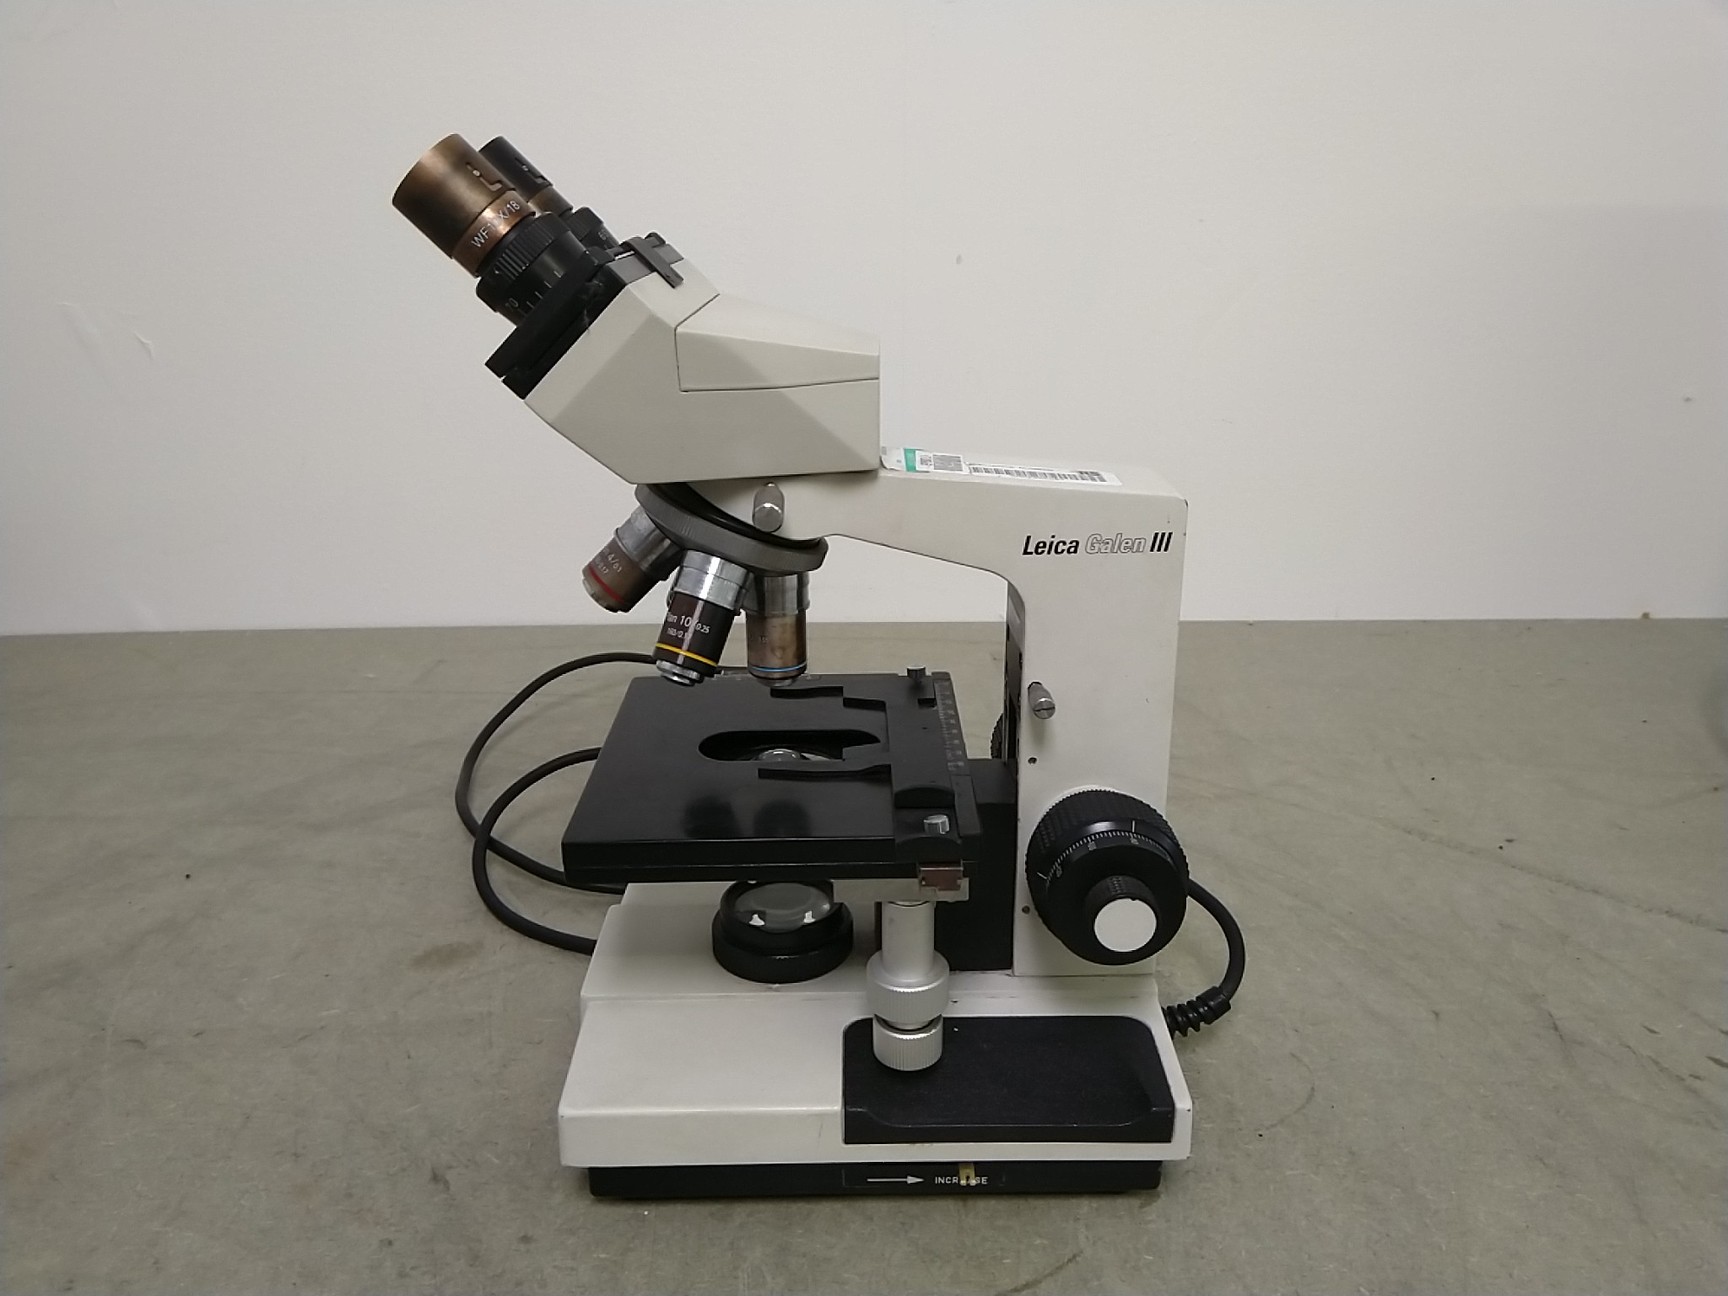 Leica Gallen III - Binocular Microscope with 4 objectives